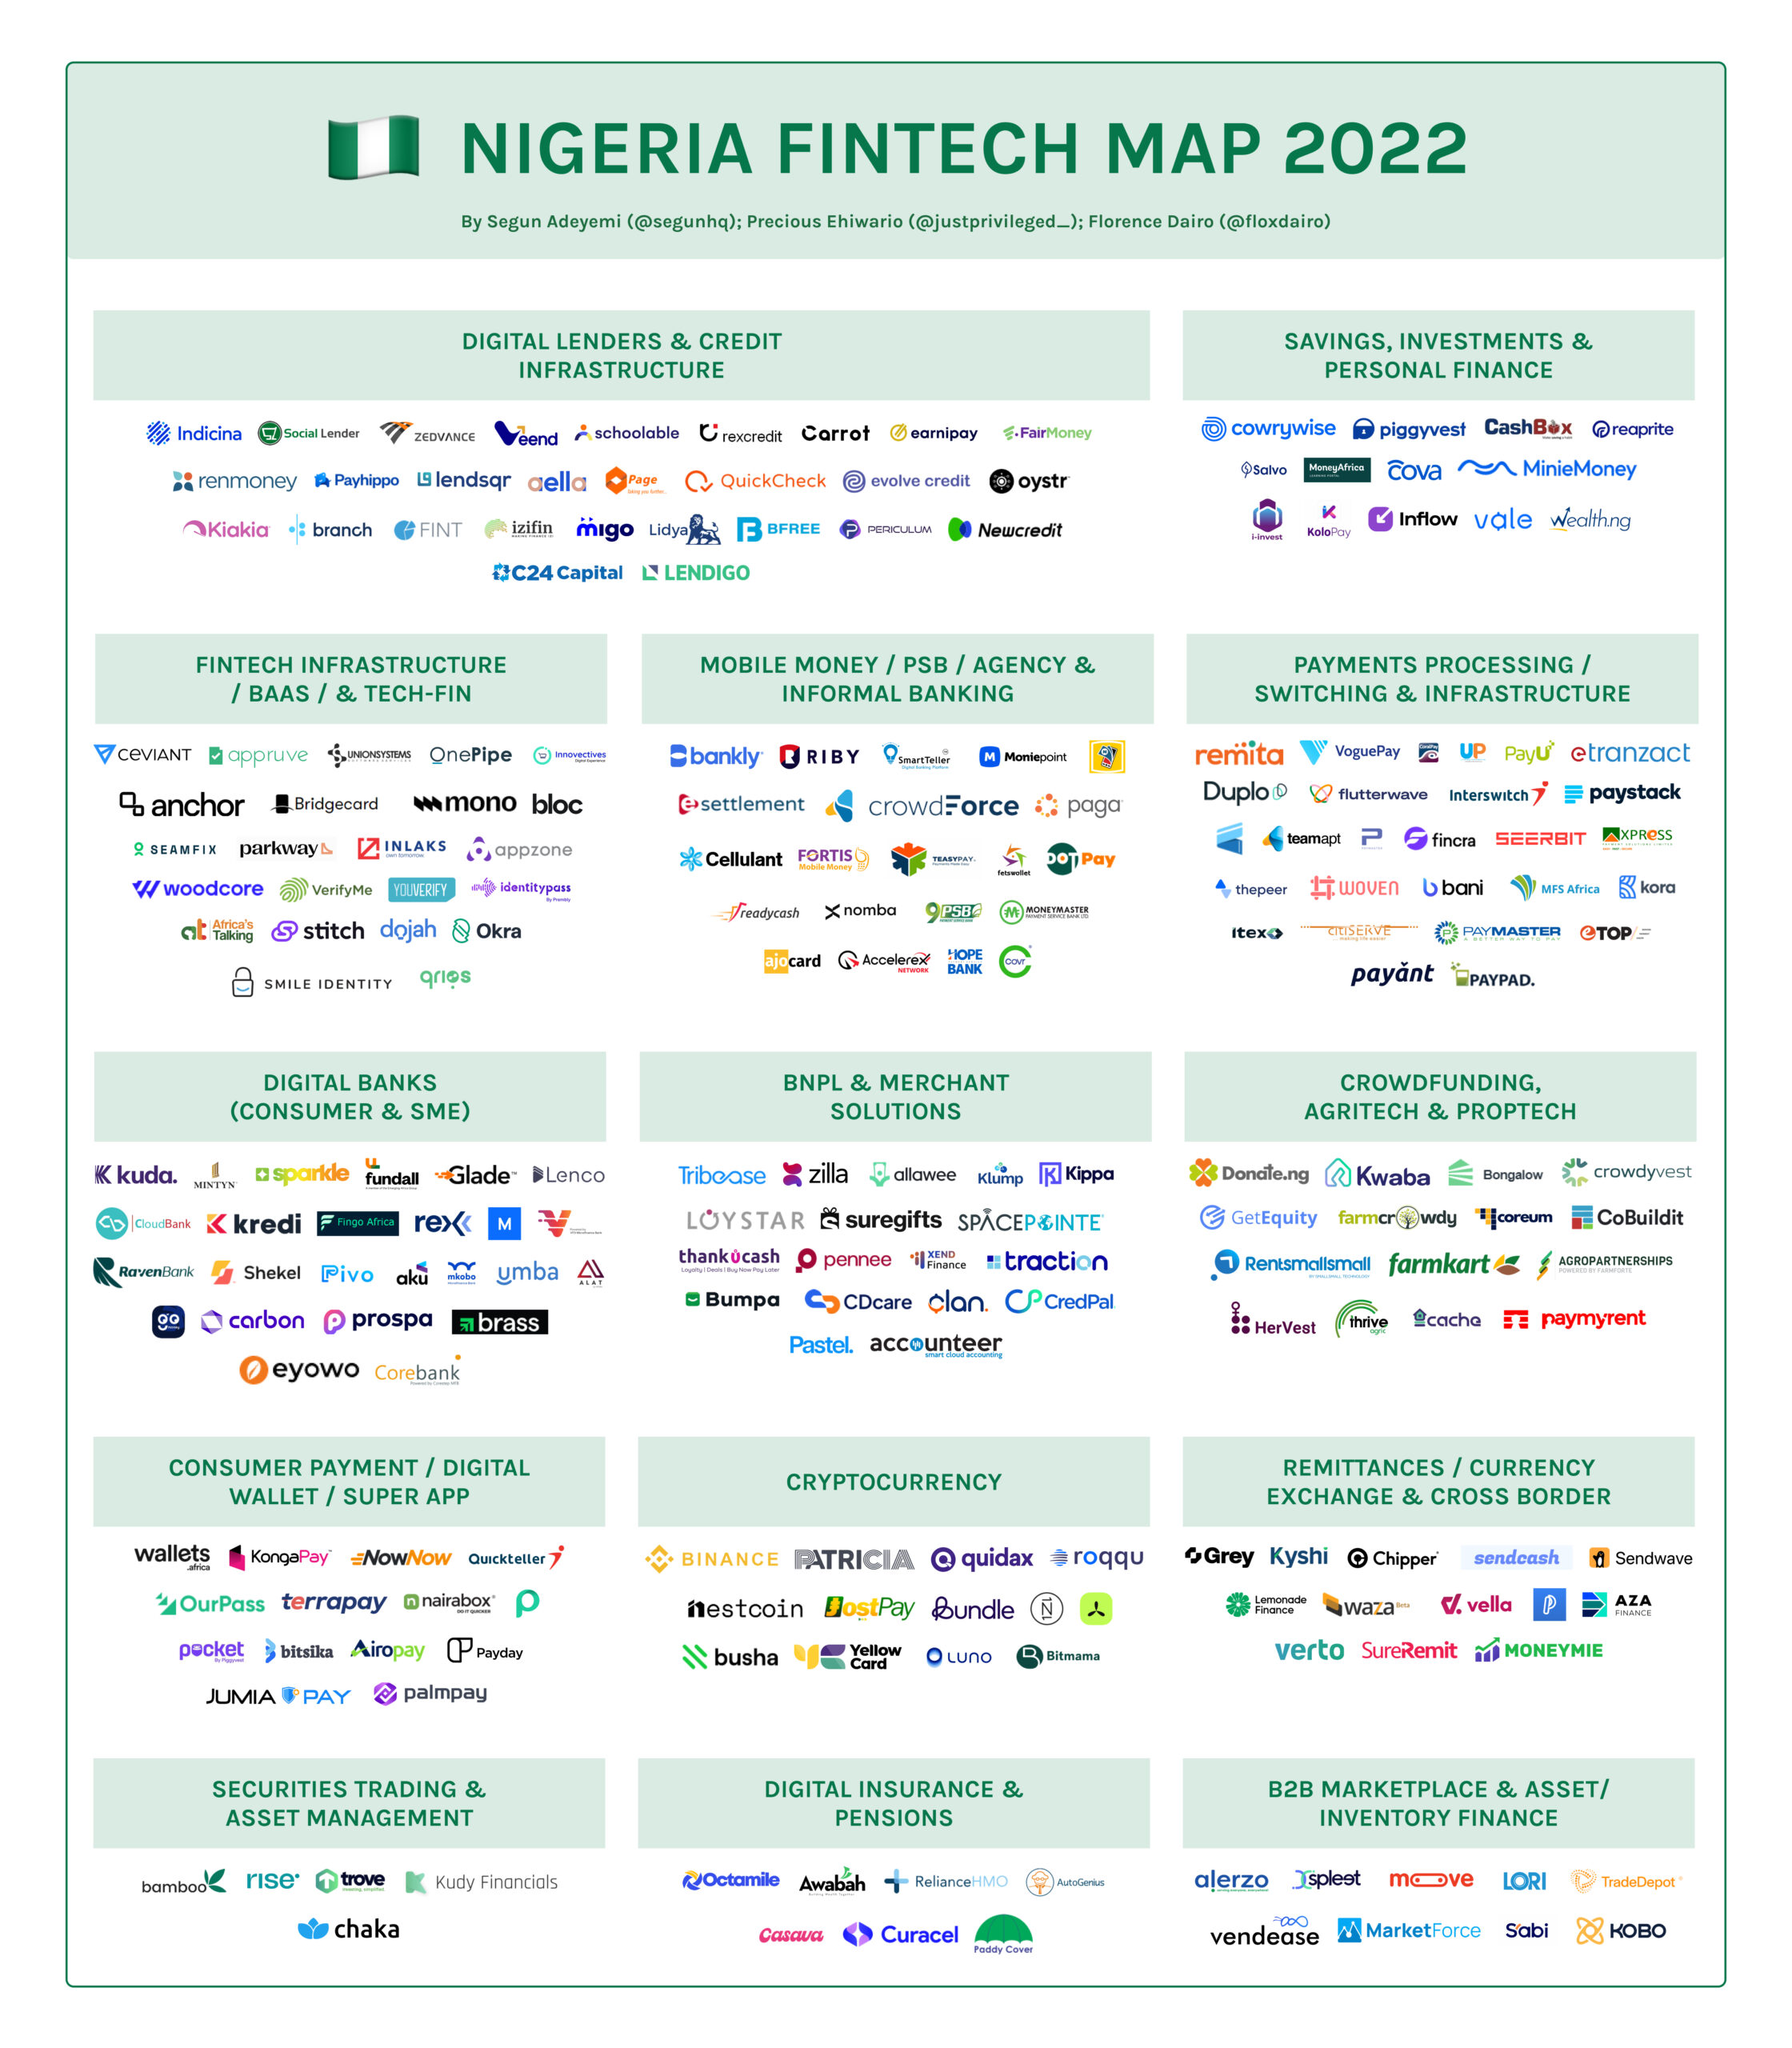 Nigeria Fintech Map 2022, Source: Segun Adeyemi, LinkedIn